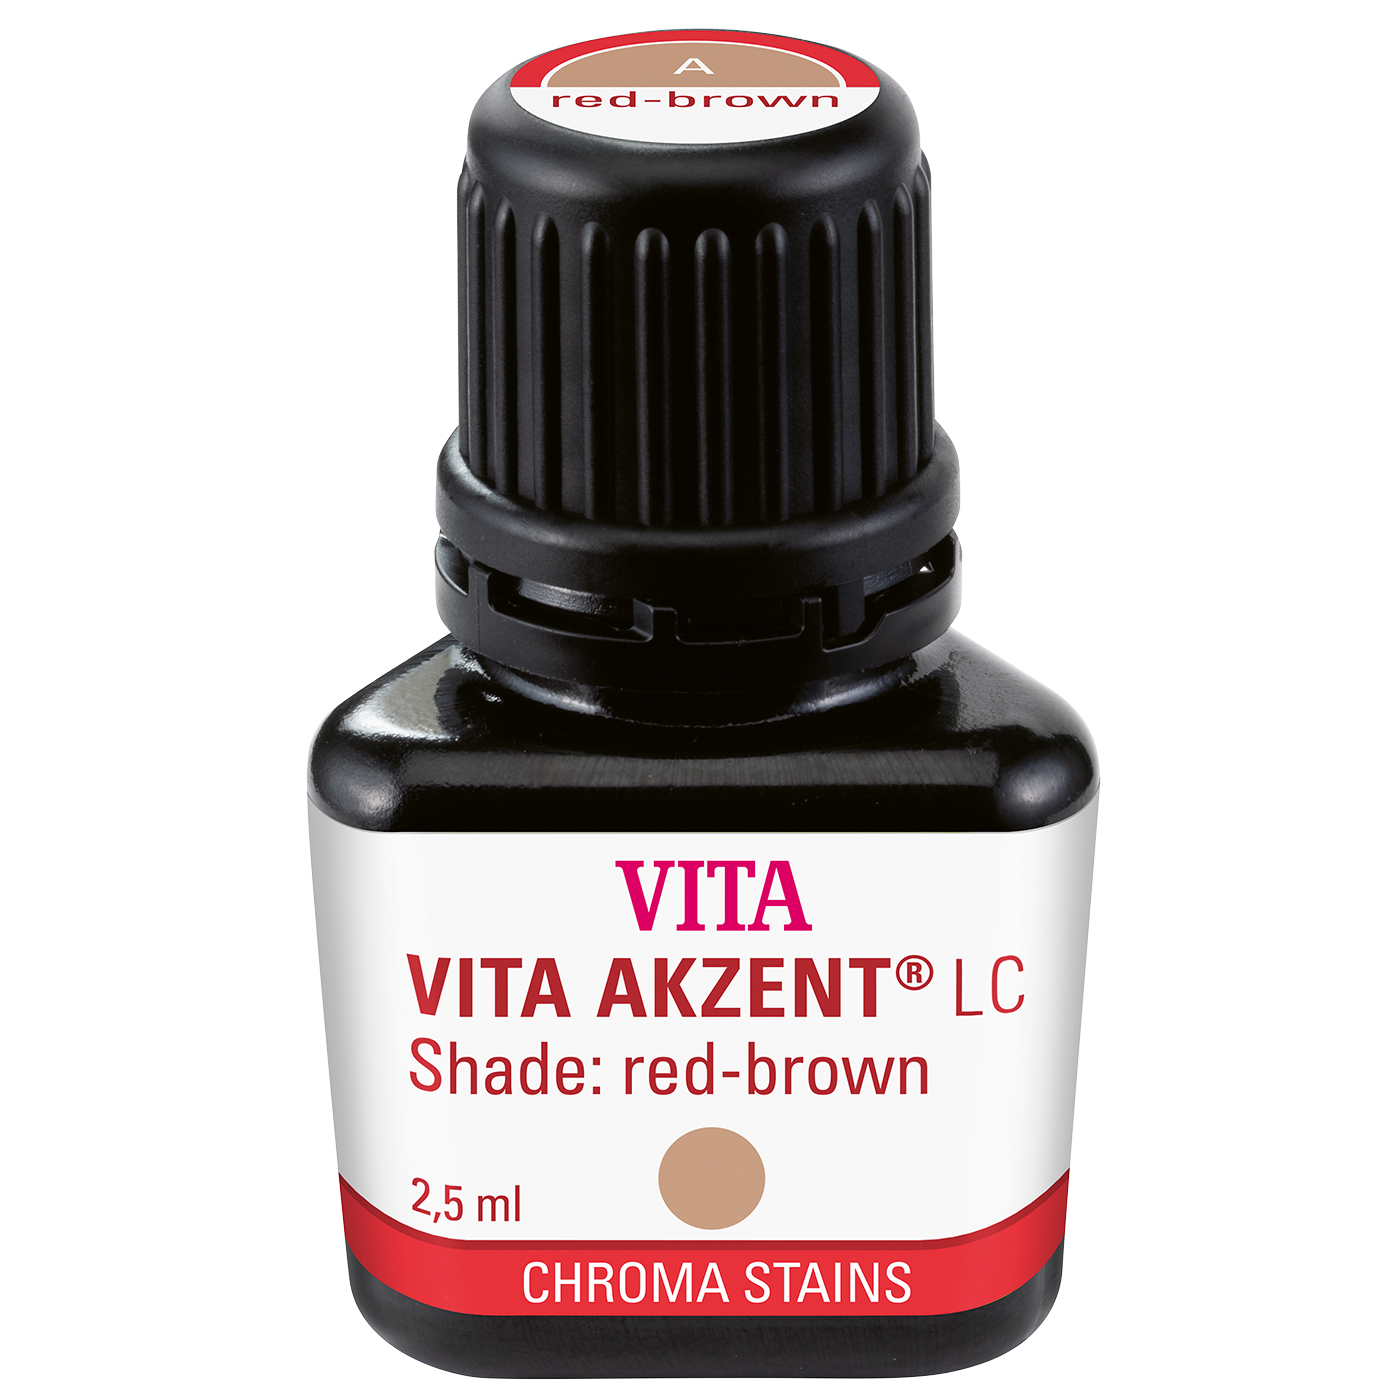 Vita Akzent LC Chroma Stains grey-brown